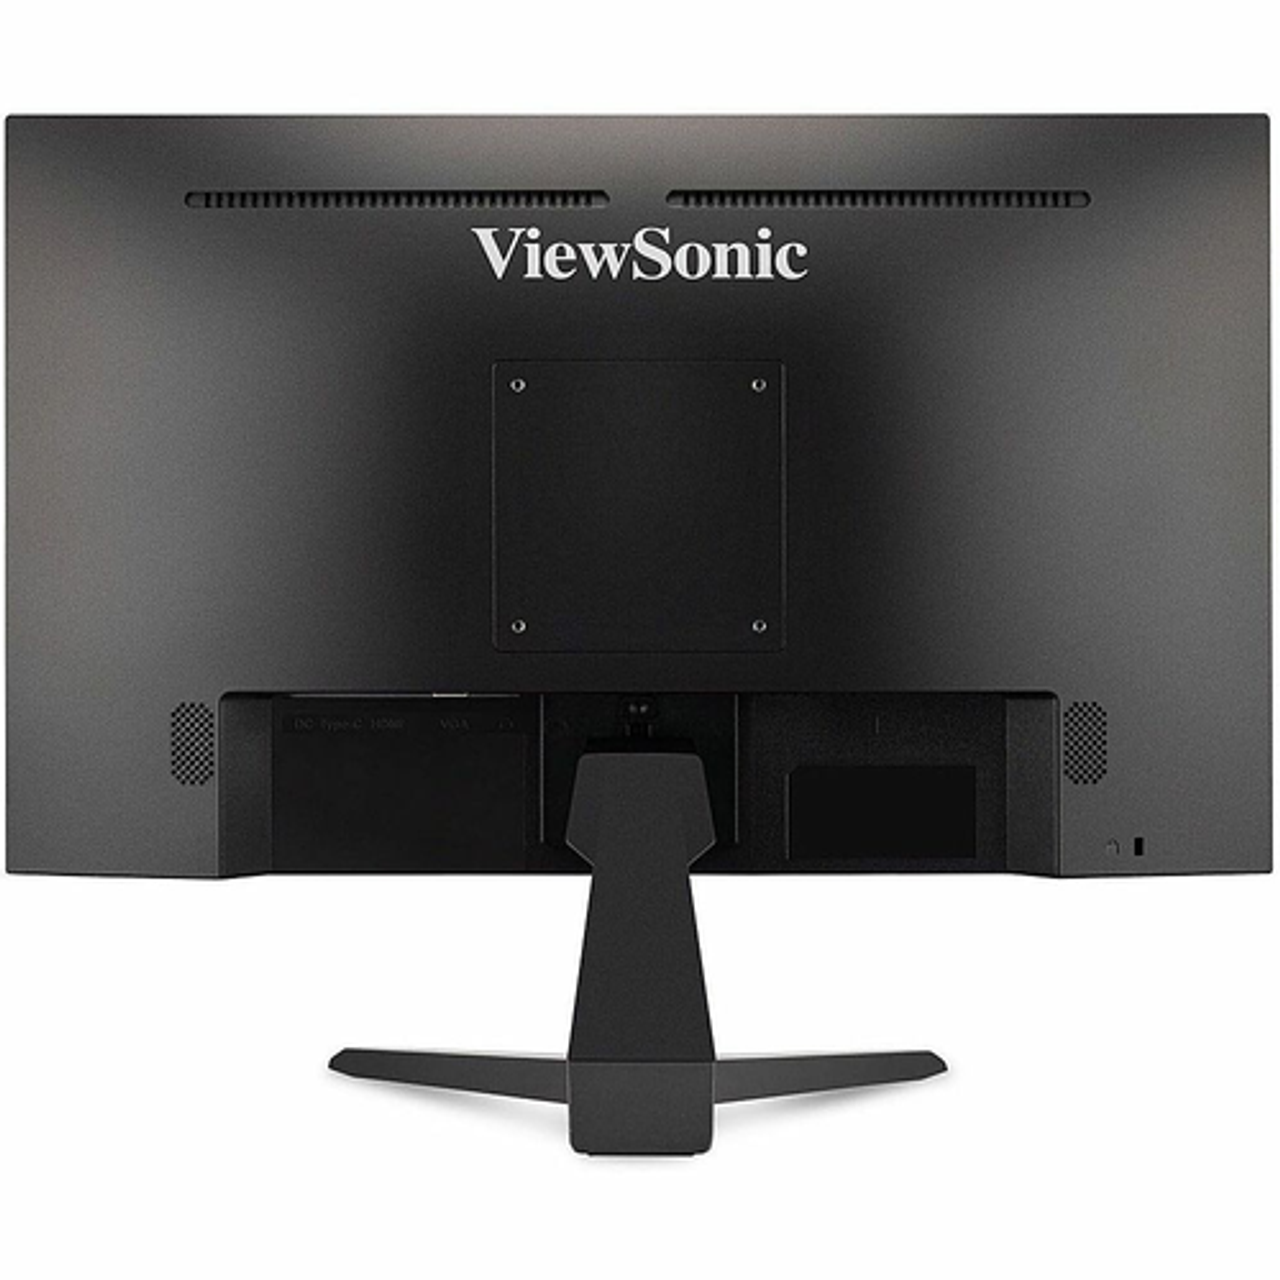 ViewSonic - VX2467U 24" 1080p IPS Monitor with 65W USB C and HDMI - Black